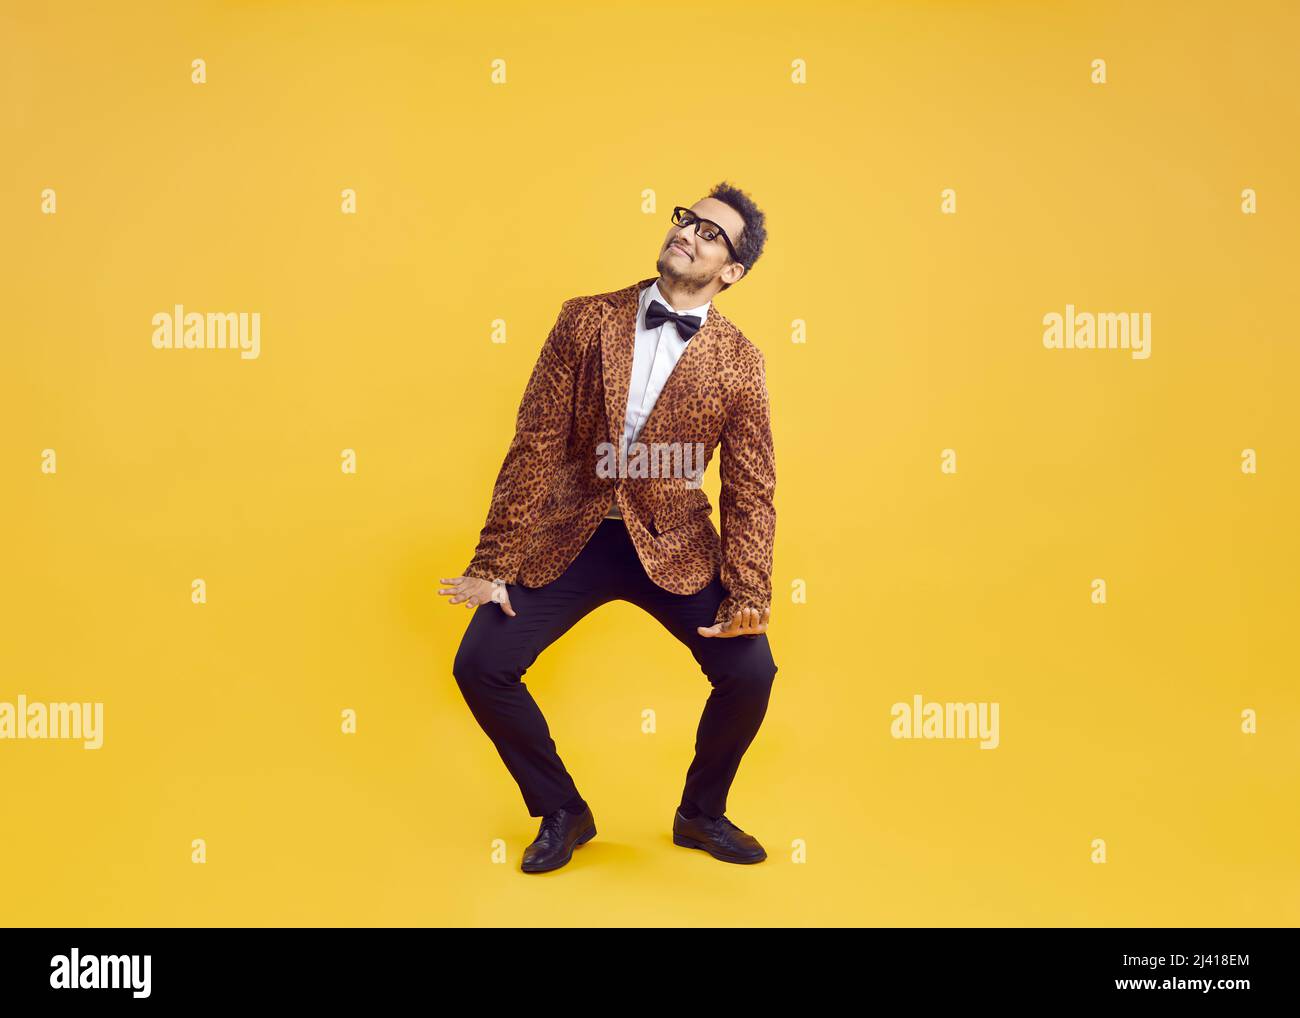 Happy funny goofy black man in leopard jacket dancing on yellow studio background Stock Photo